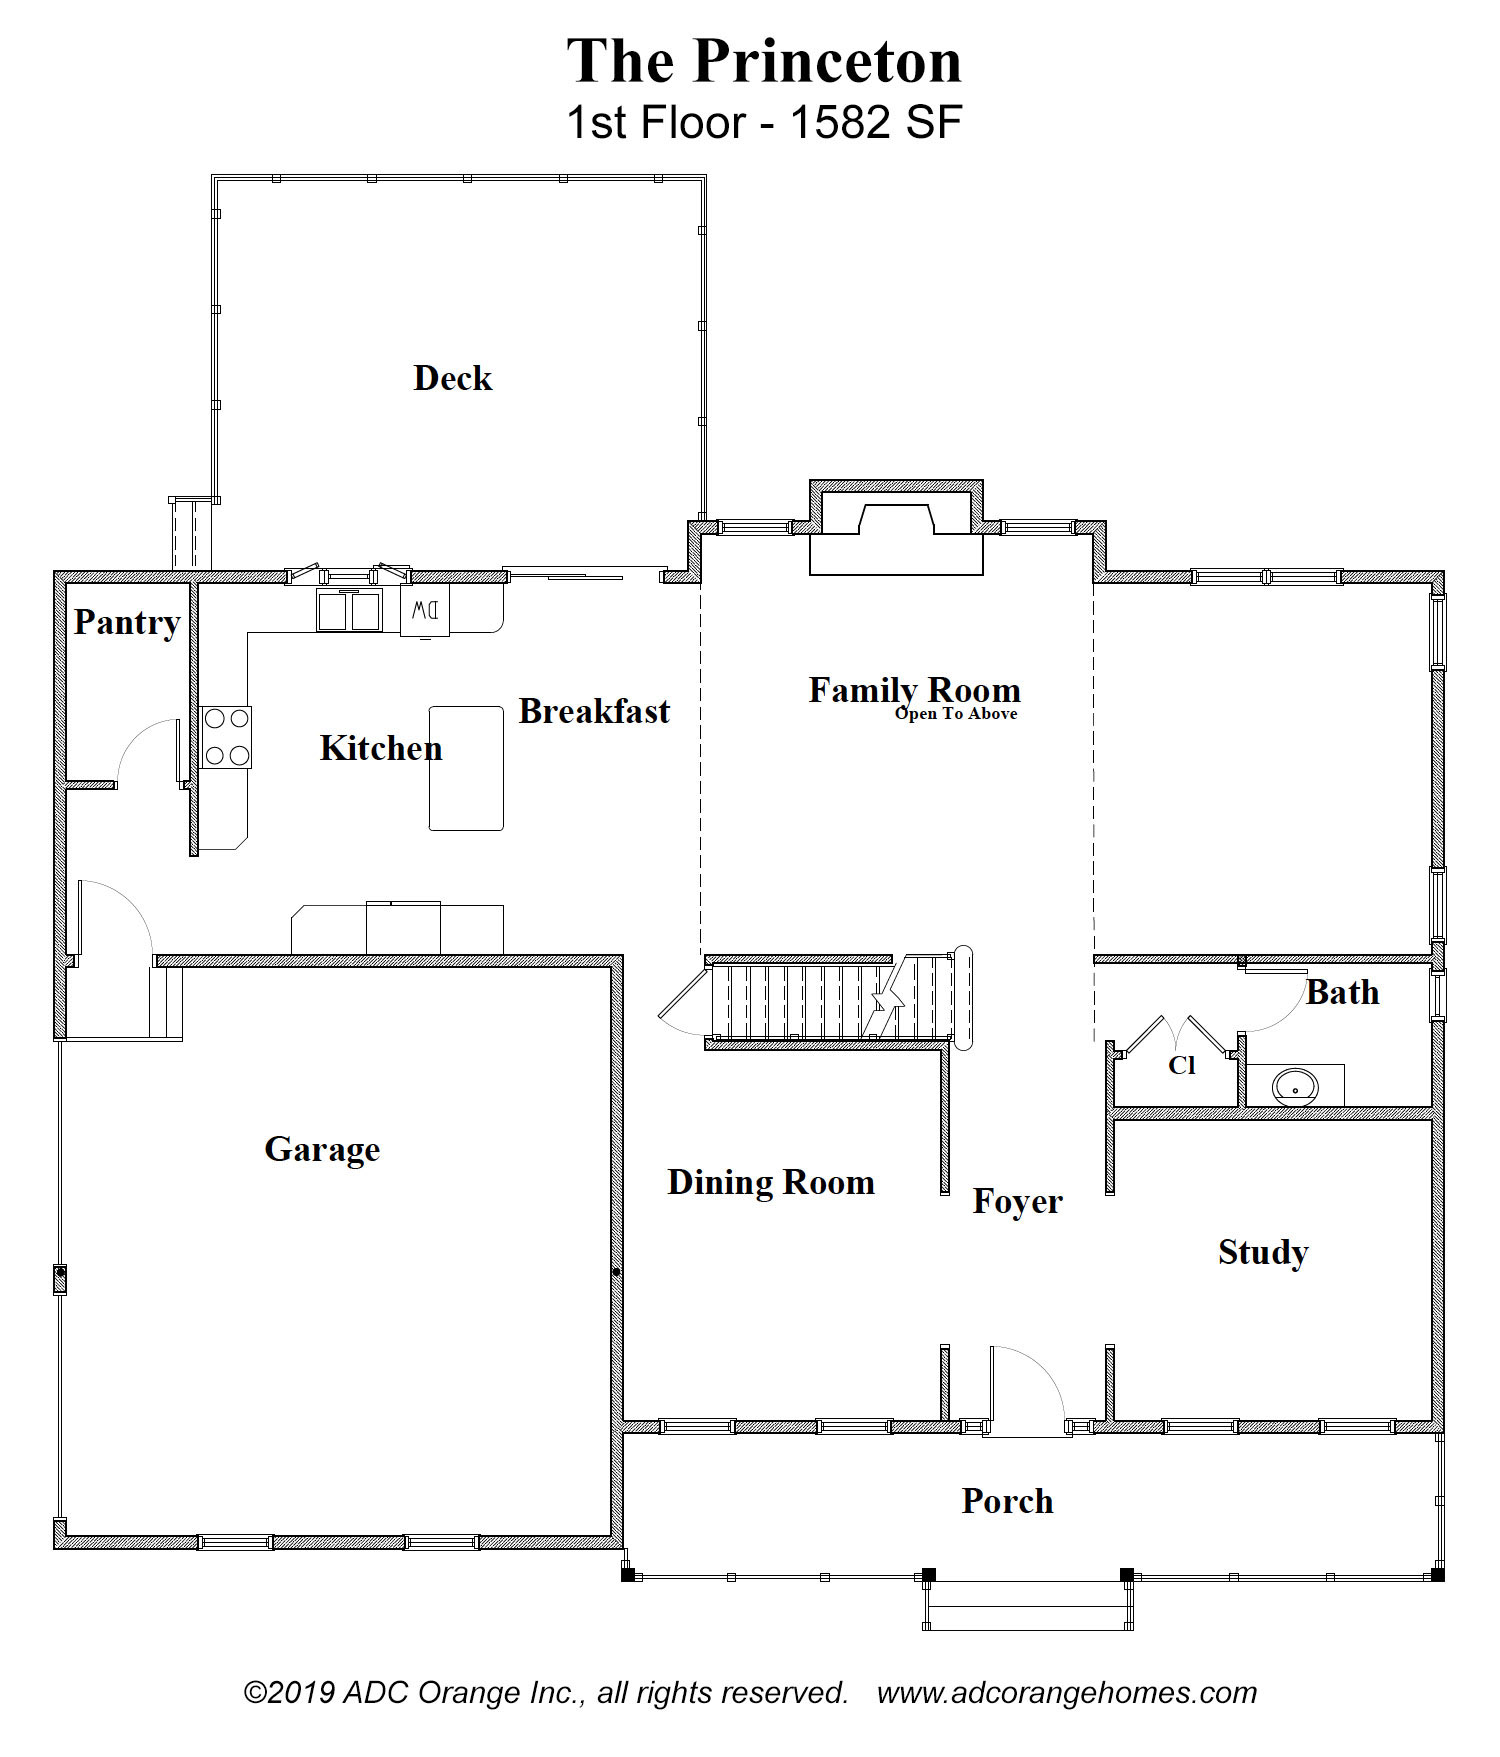 1st Floor Plan - The Princeton